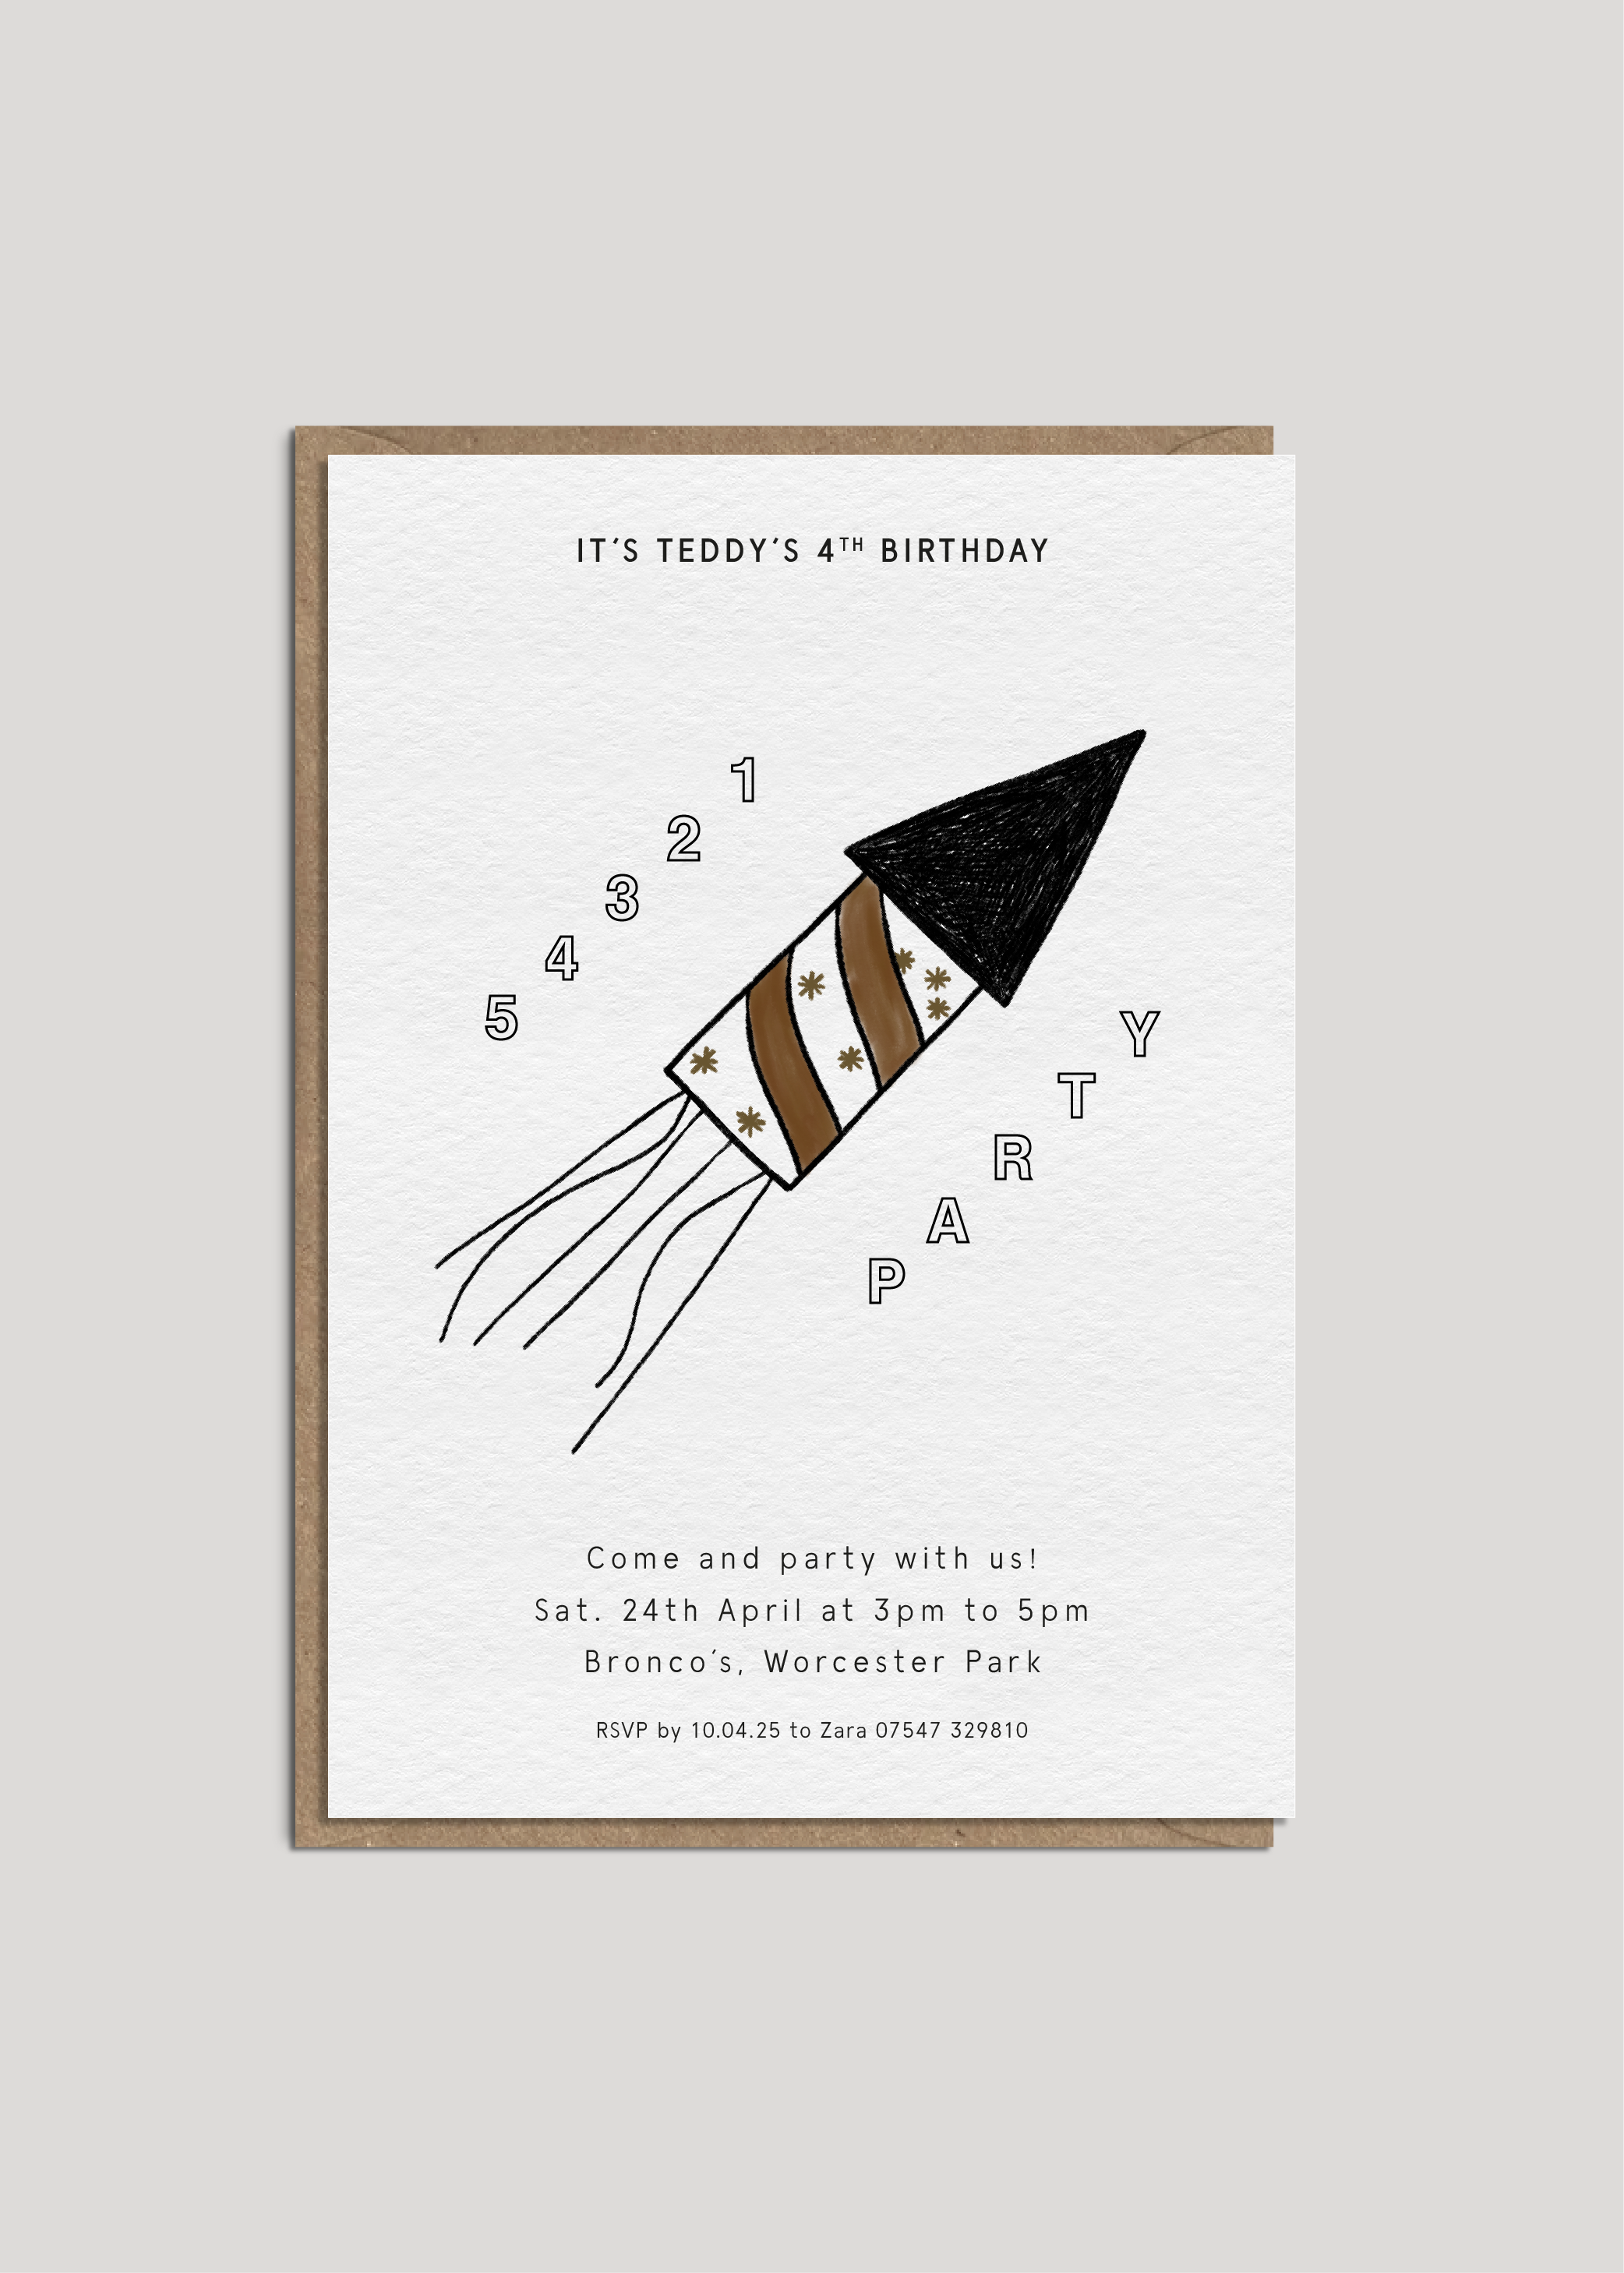 Teddy's Rocket Invite — Printed